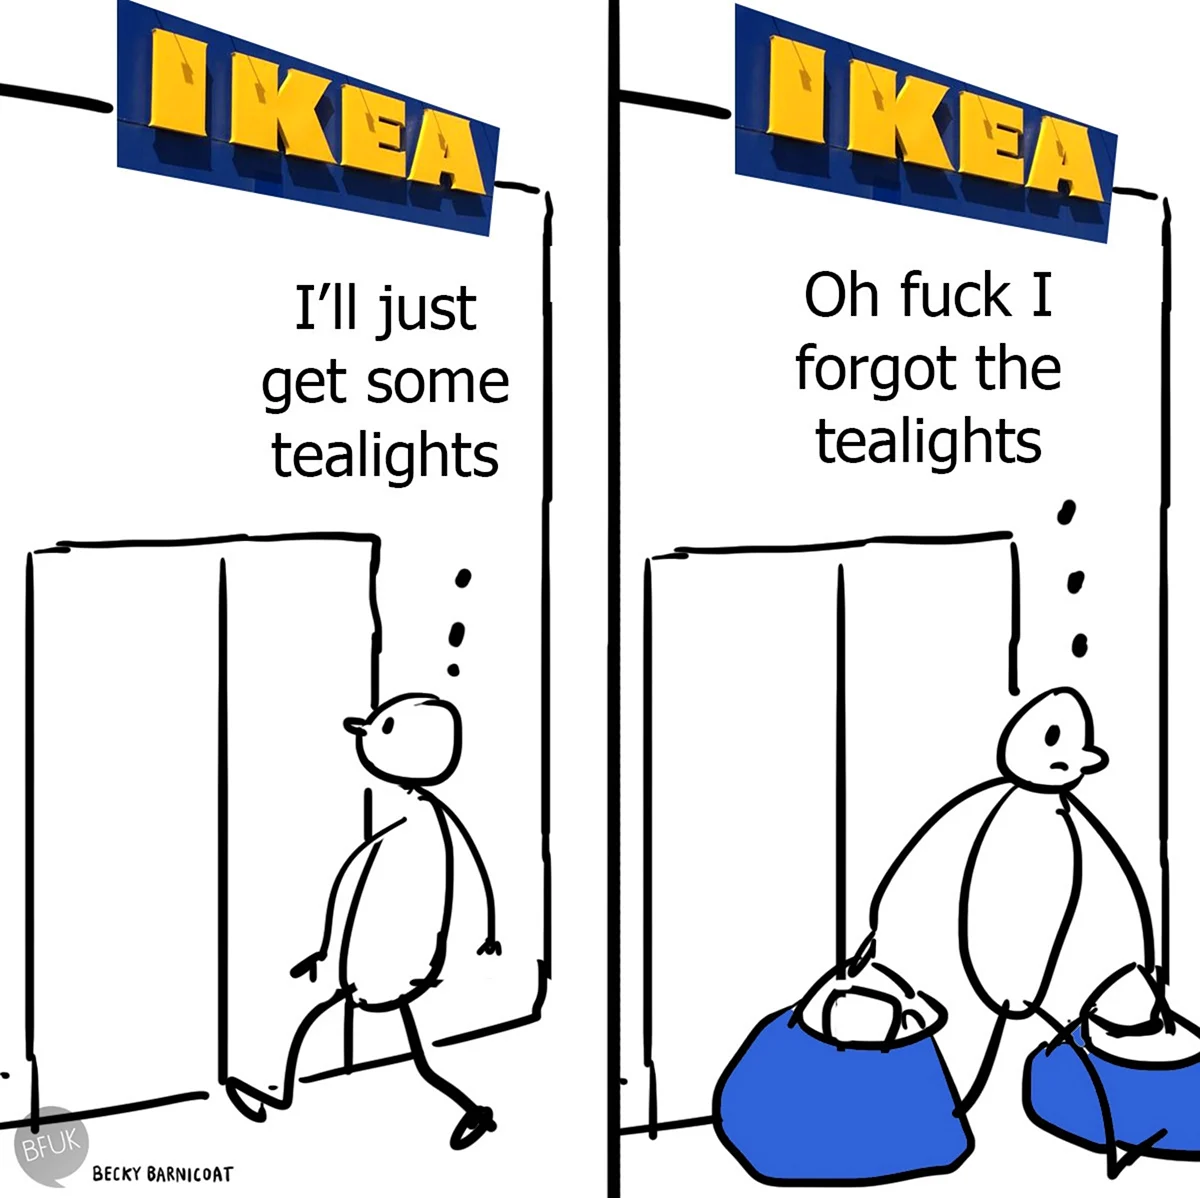 Ikea шутки. Прикольная картинка